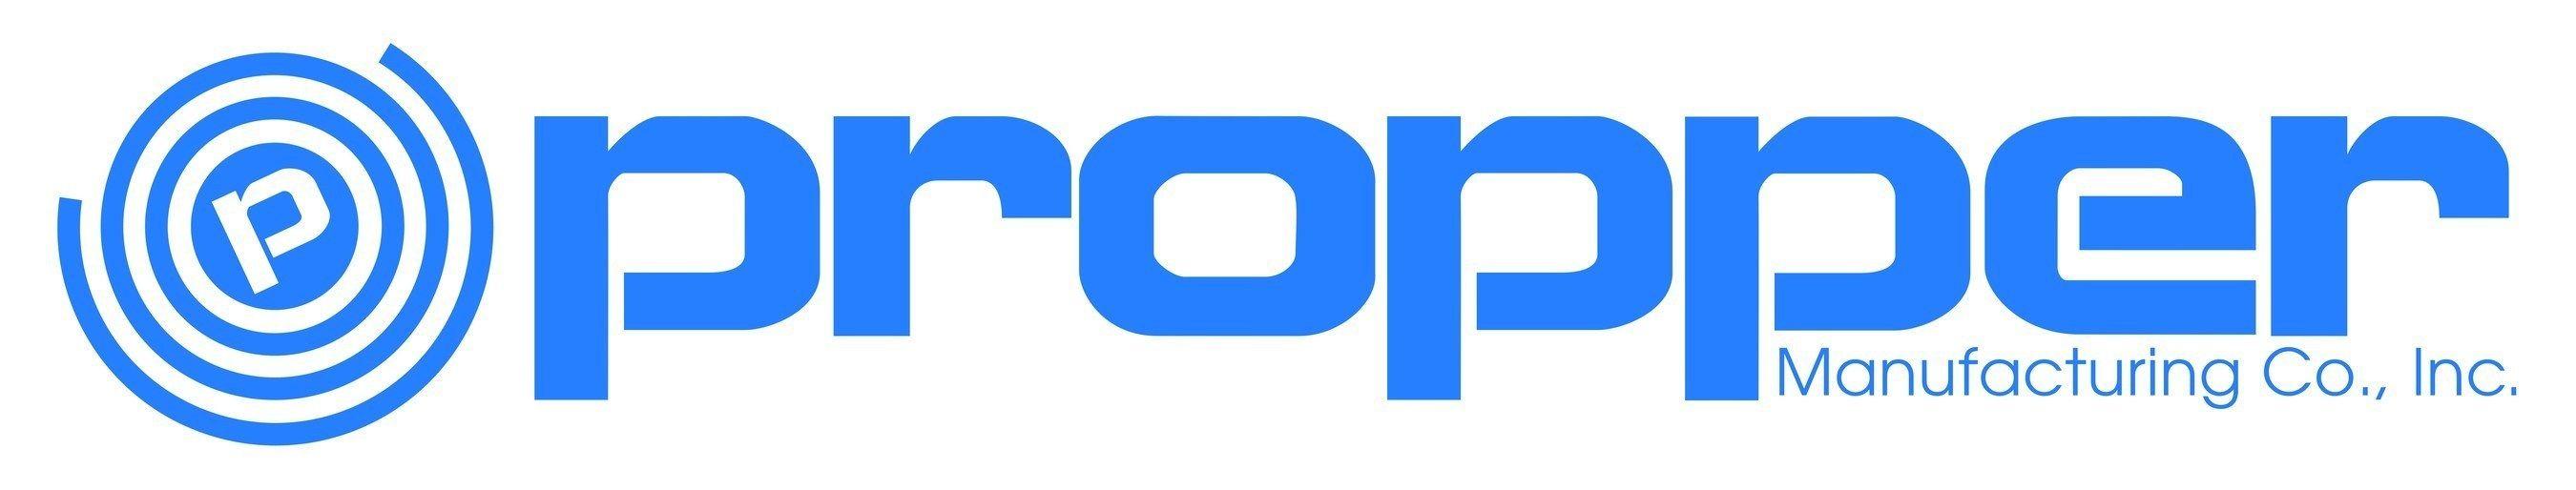 Propper Logo - Propper Manufacturing Company announces new Bowie-Dick sterilizer test.